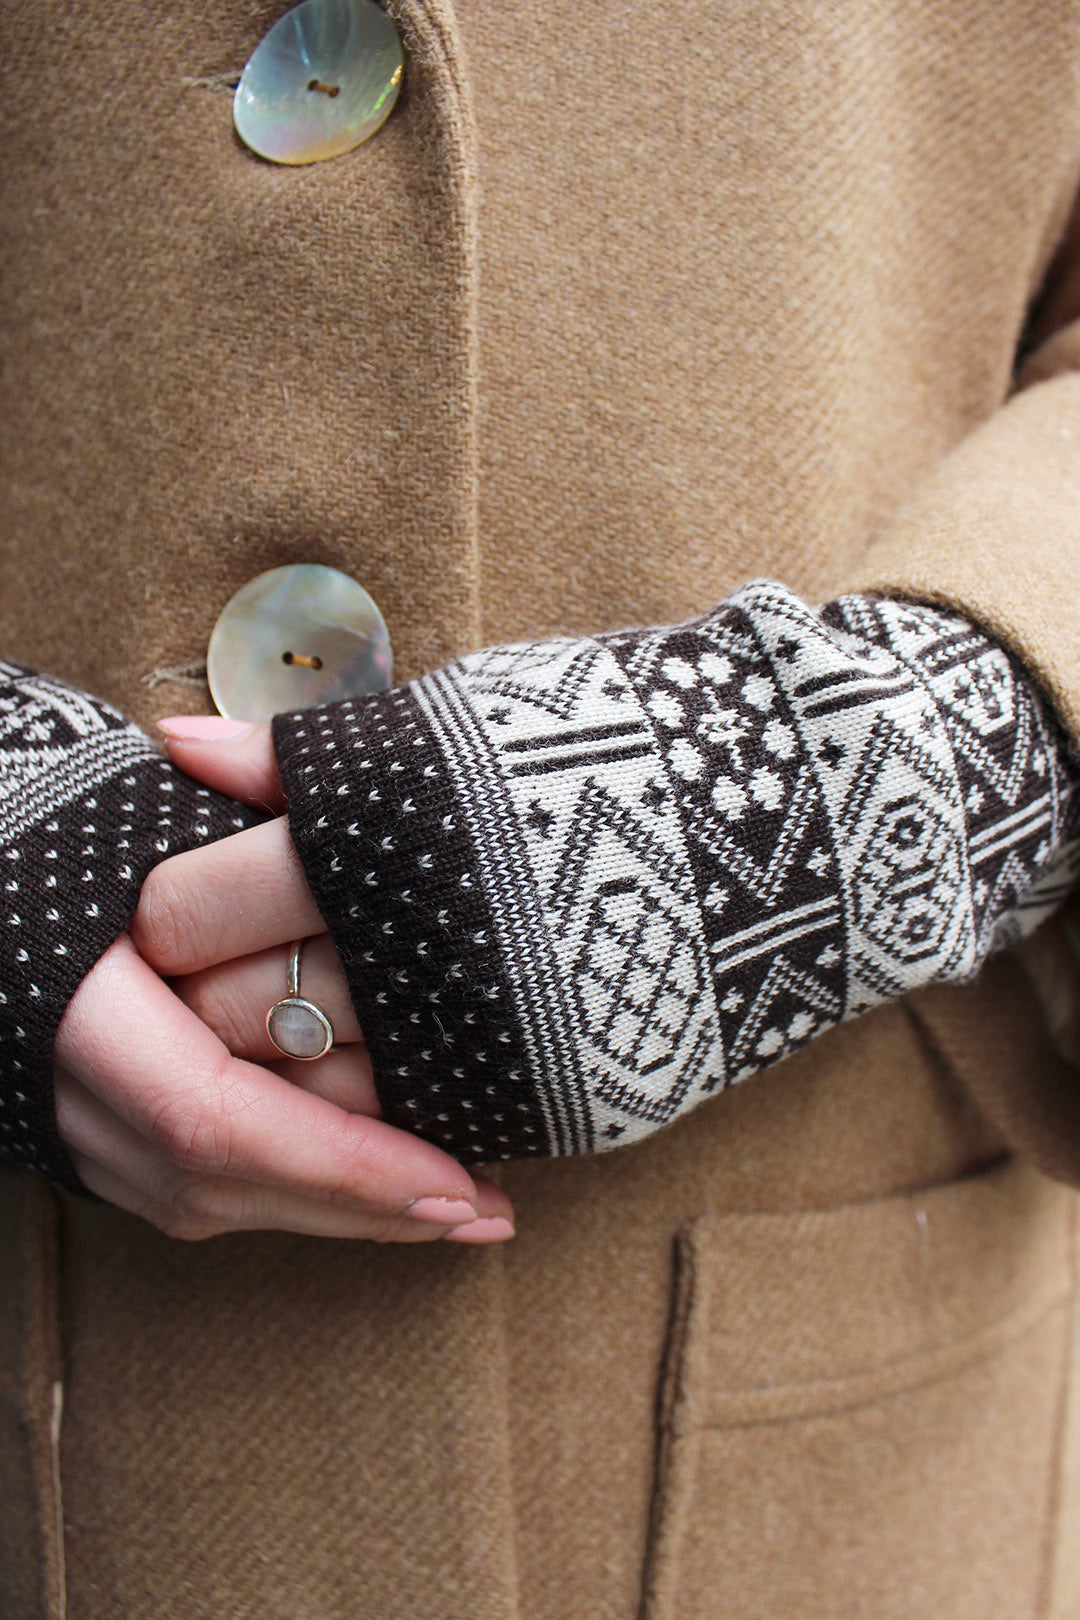 Scottish Shetland Fair Isle designer wrist warmers in black and white, based on traditional geometric Shetland designs. This beautiful pair of Fair Isle wrist warmers is knitted by BAKKA in soft merino wool.